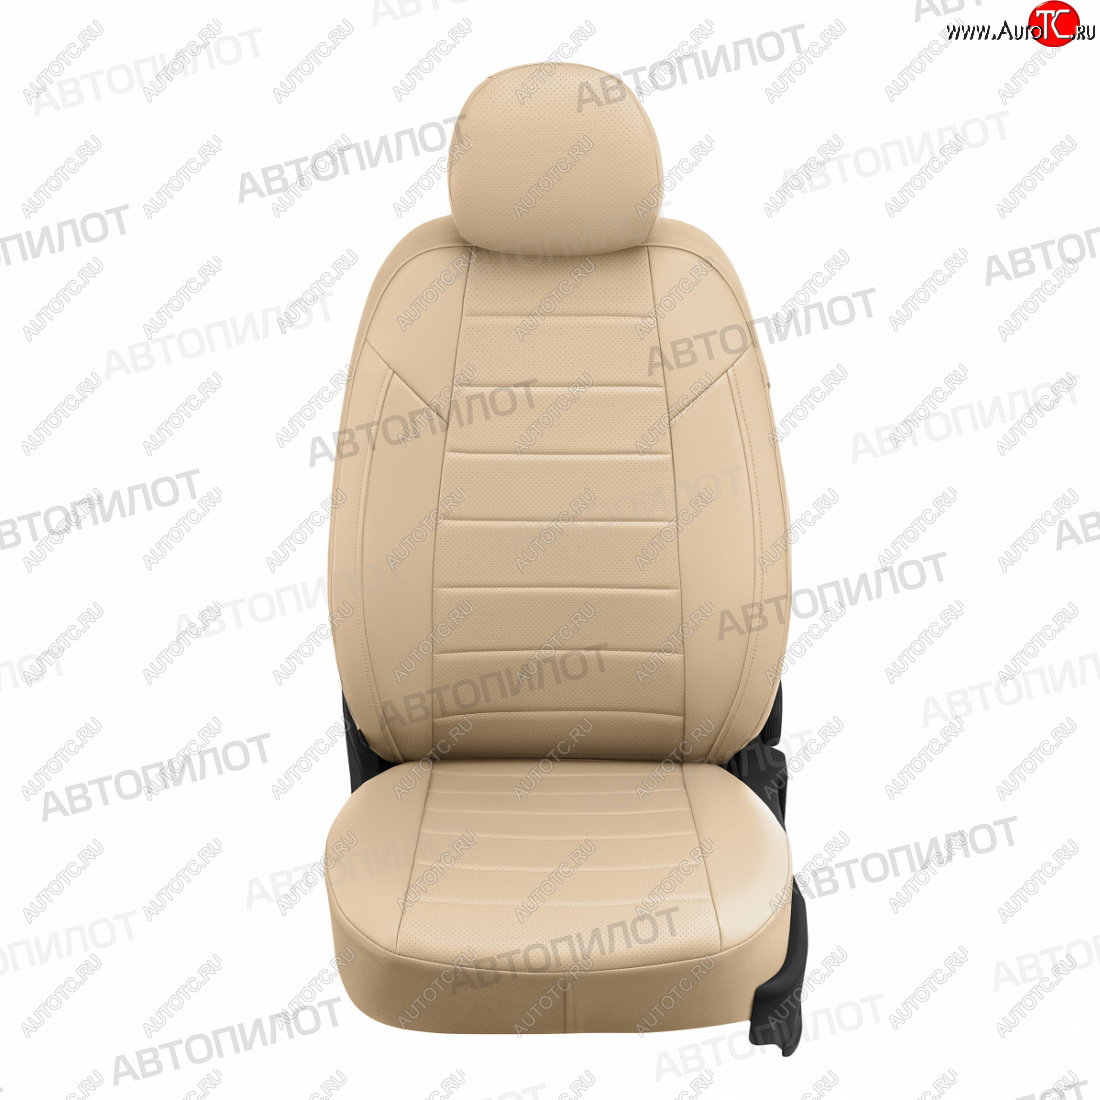 13 449 р. Чехлы сидений (экокожа) Автопилот  Hyundai Sonata  EF (2001-2013), KIA Magentis (2000-2005) (бежевый)